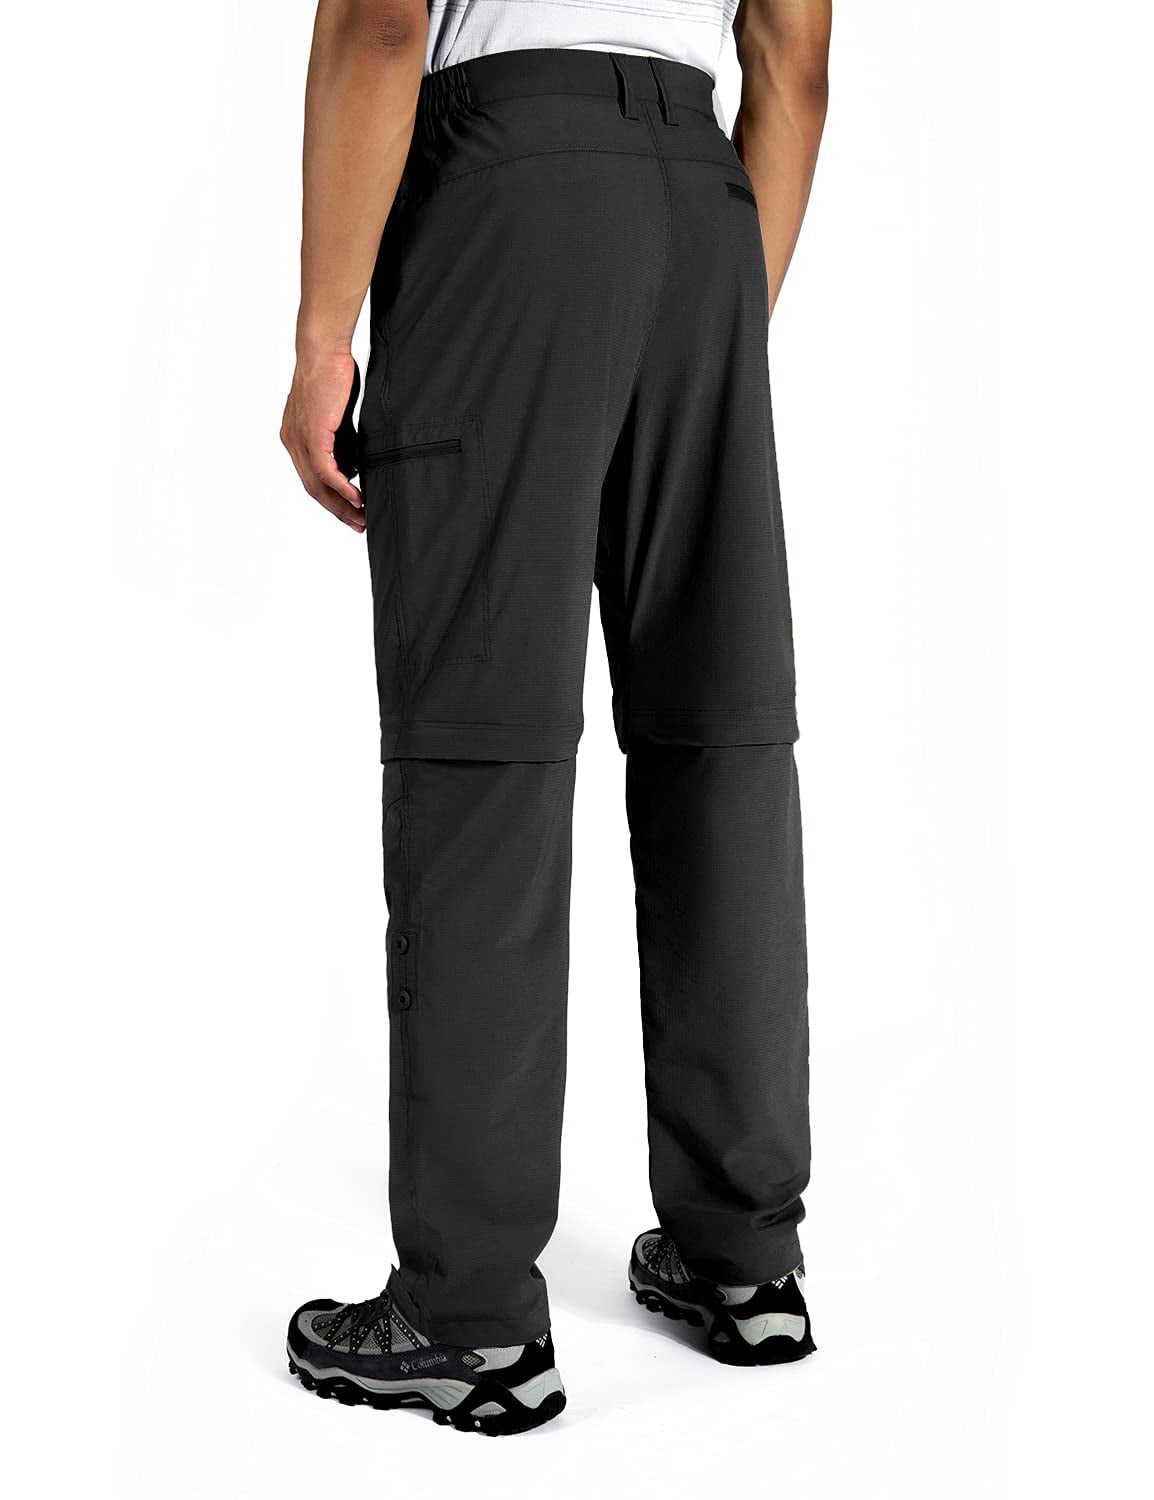 Hiauspor Men's Convertible Hiking Pants Outdoor Quick Dry Zip Off Pants  Grey Sizes S-3XL 